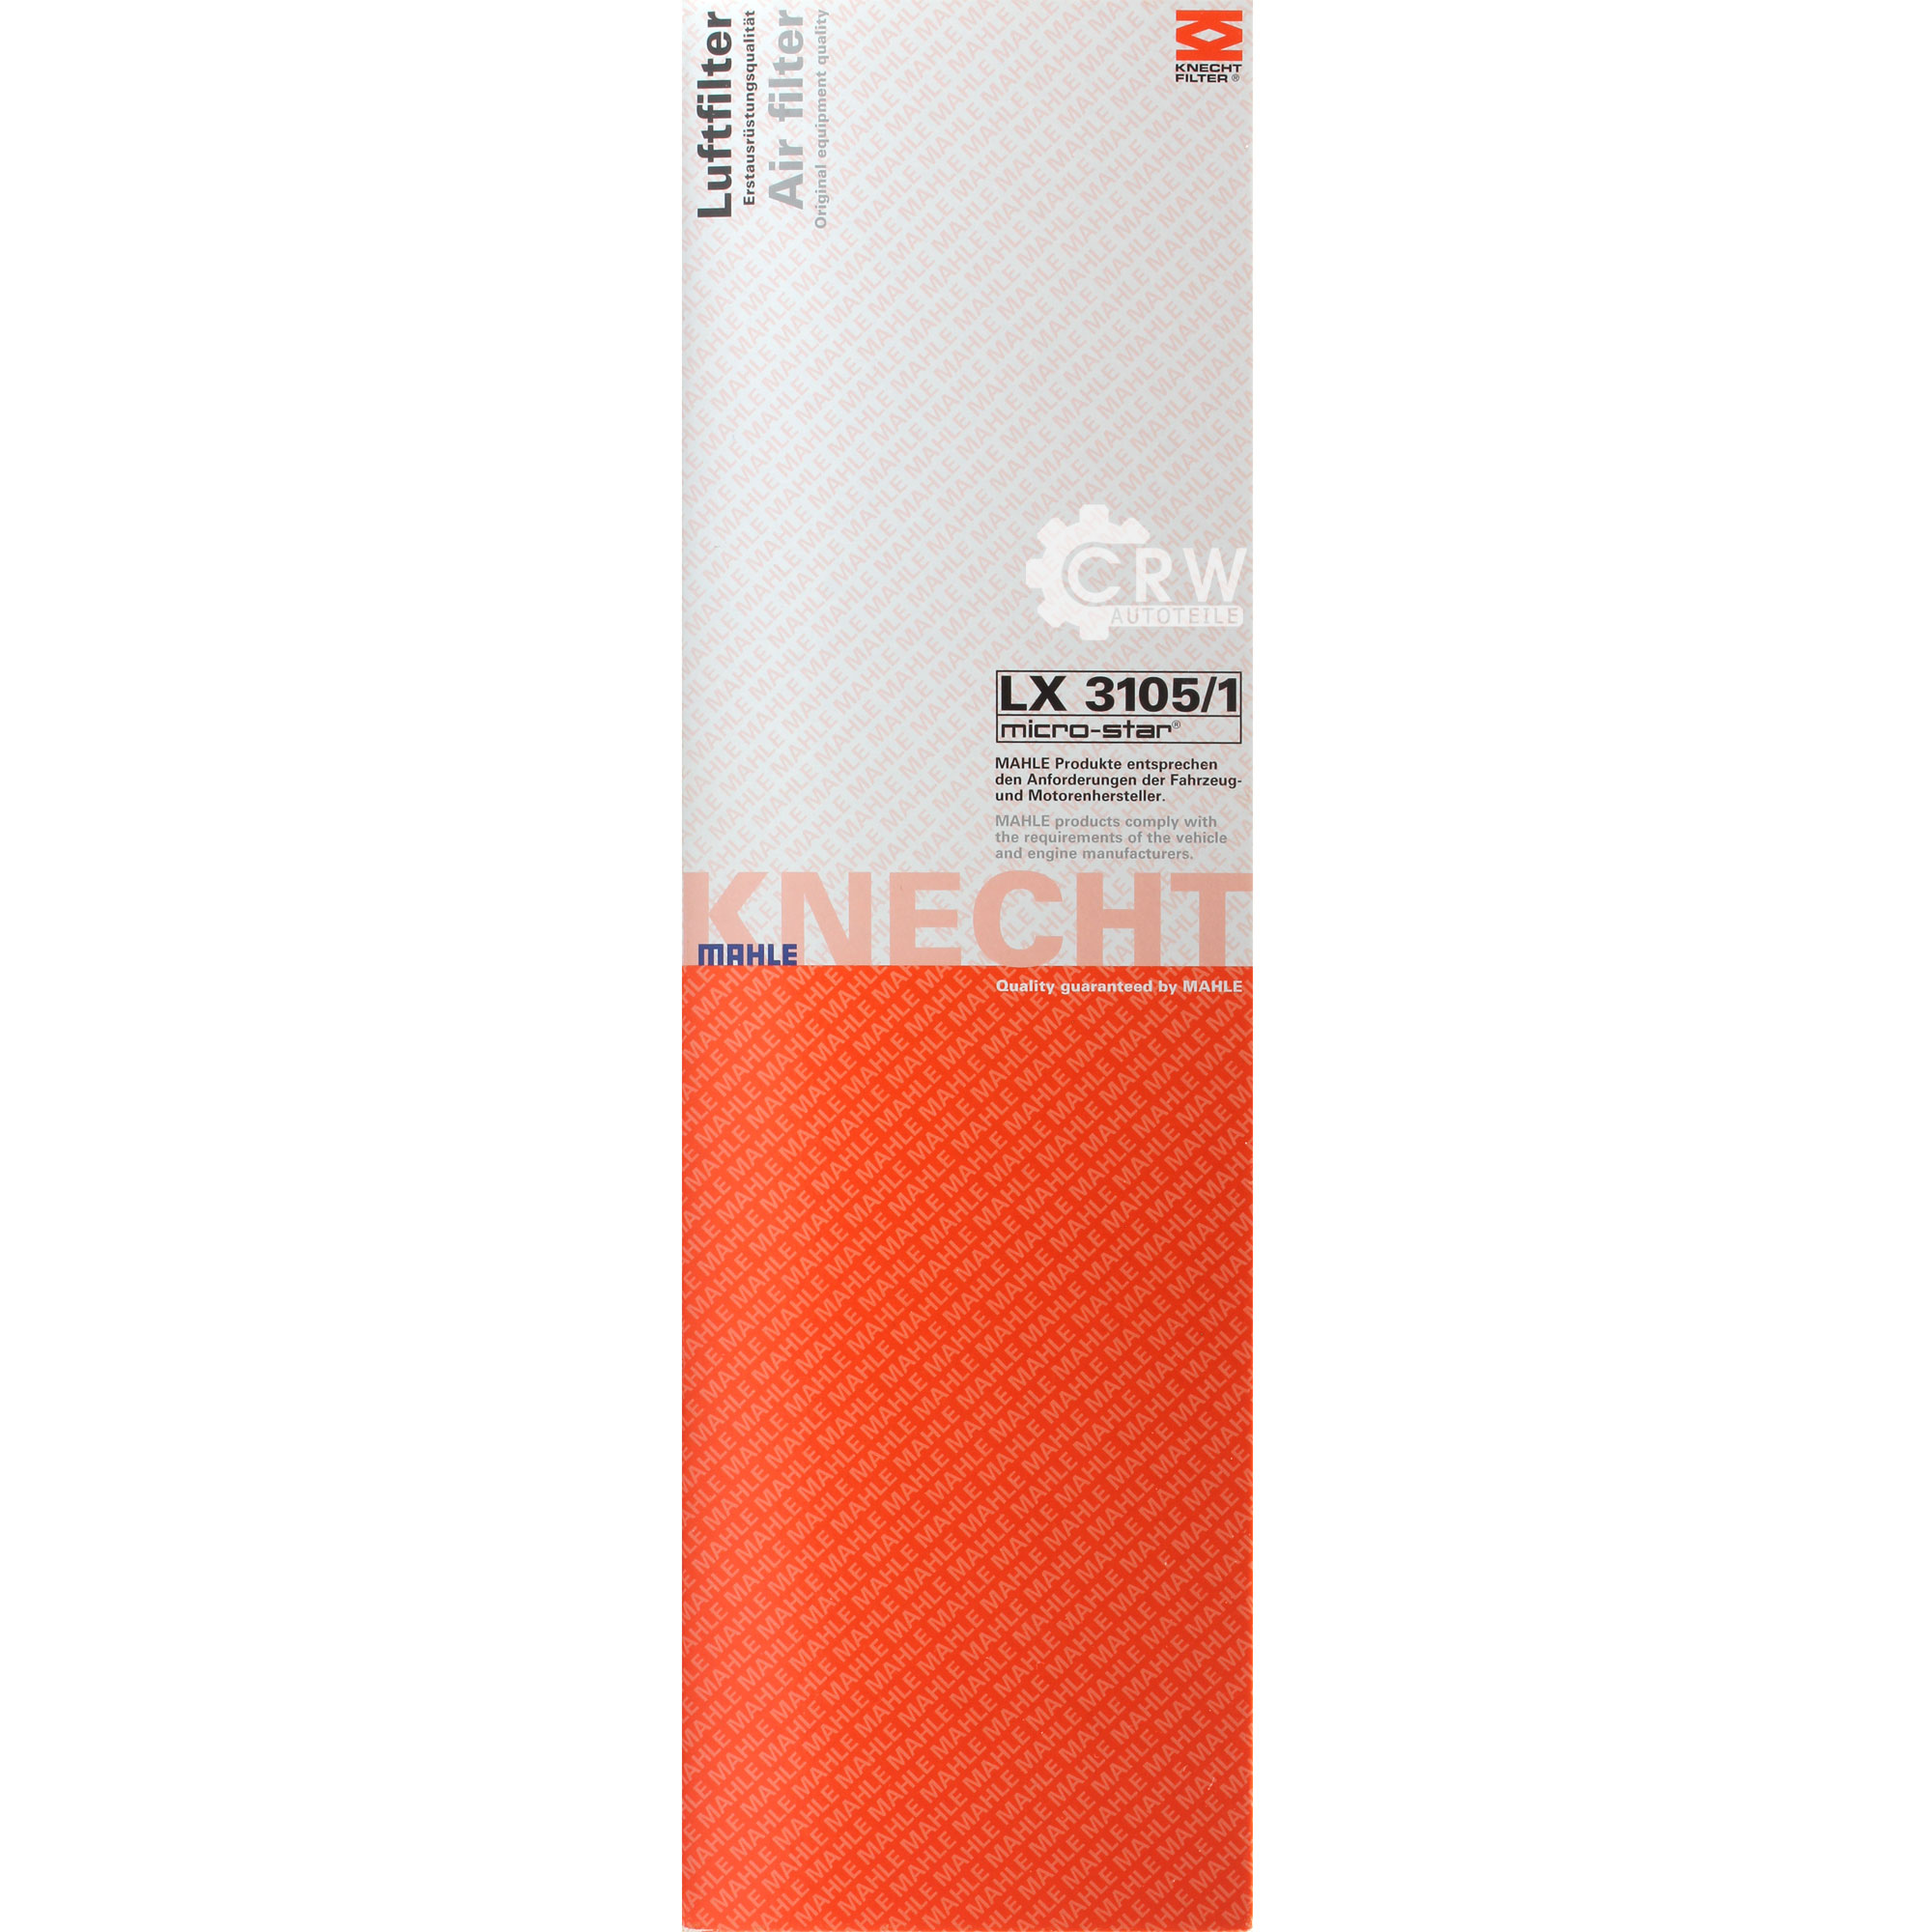 MAHLE / KNECHT Luftfilter LX 3105/1 Air Filter für Mercedes-Benz C-Klasse